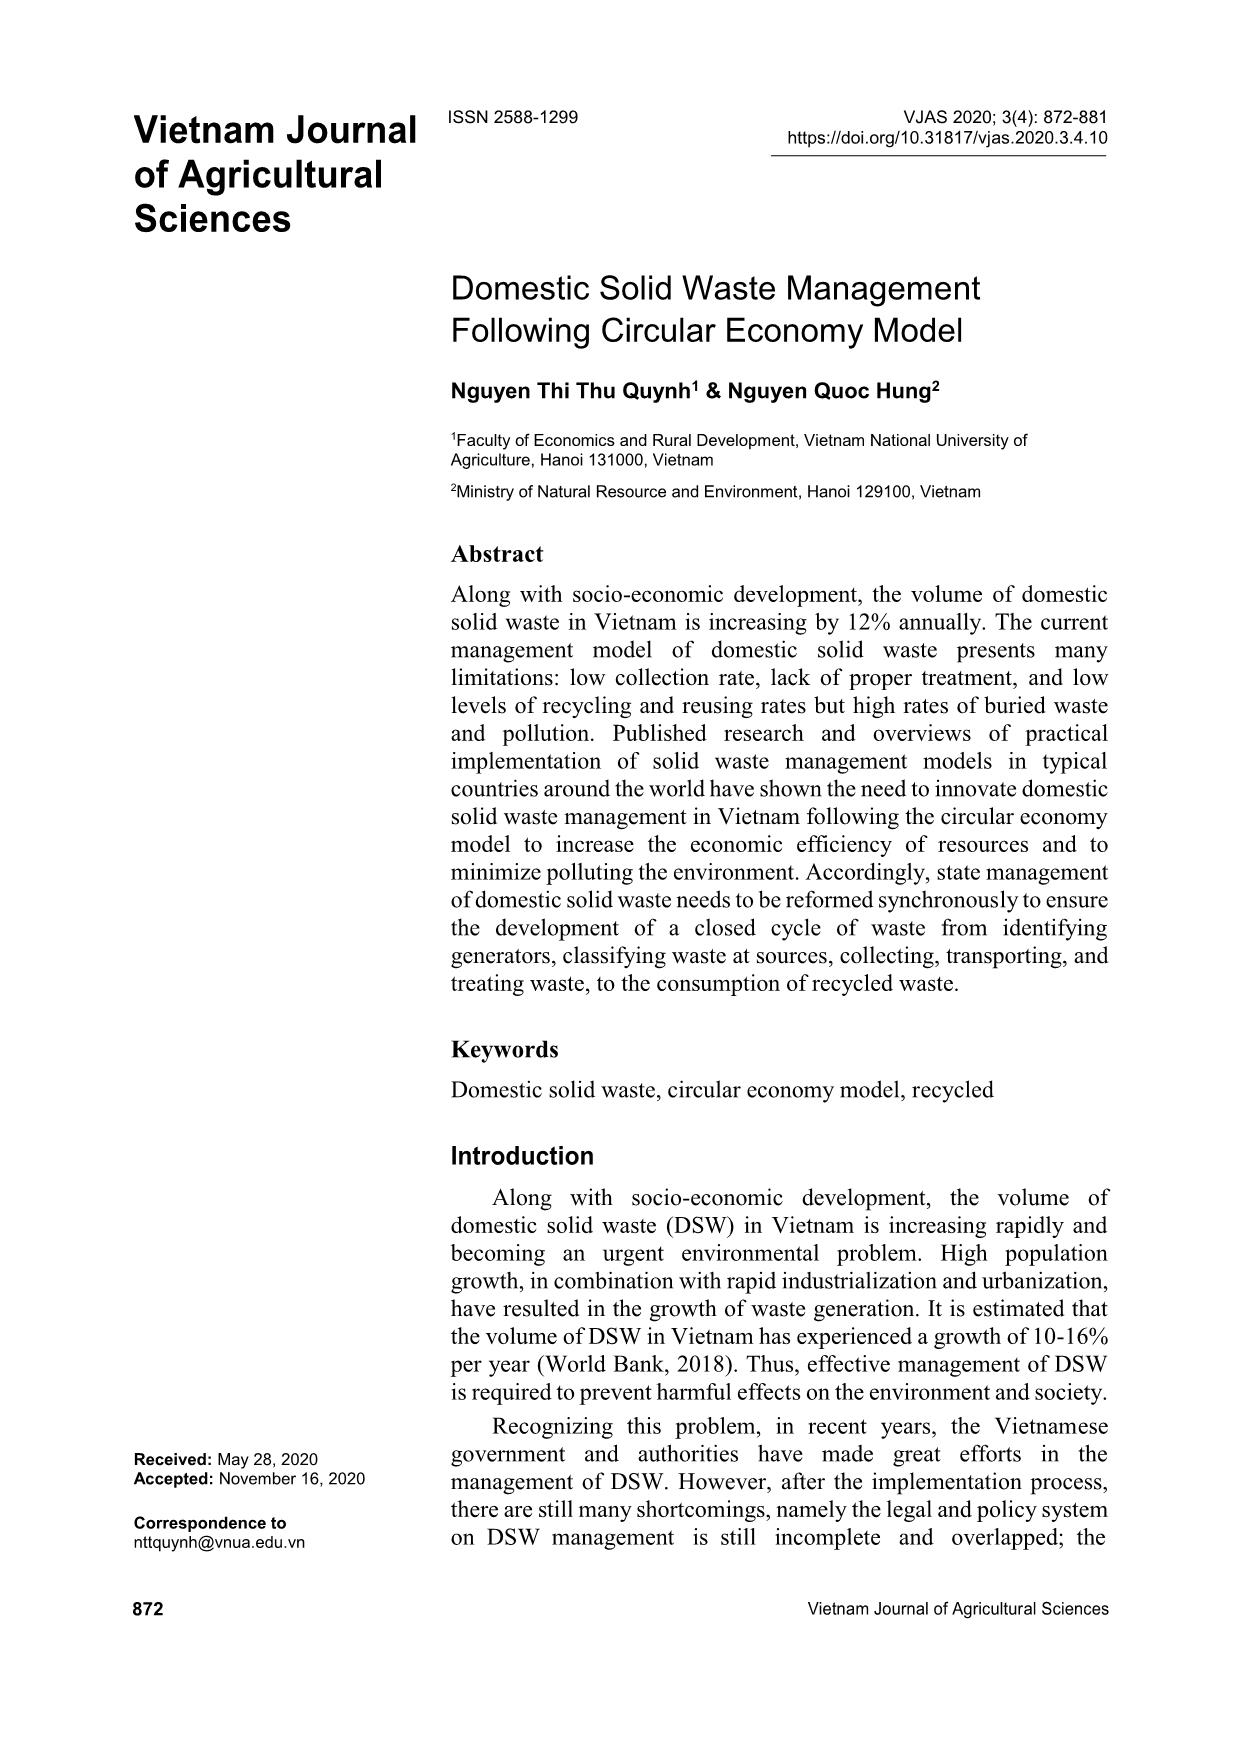 Domestic solid waste management following circular economy model trang 1